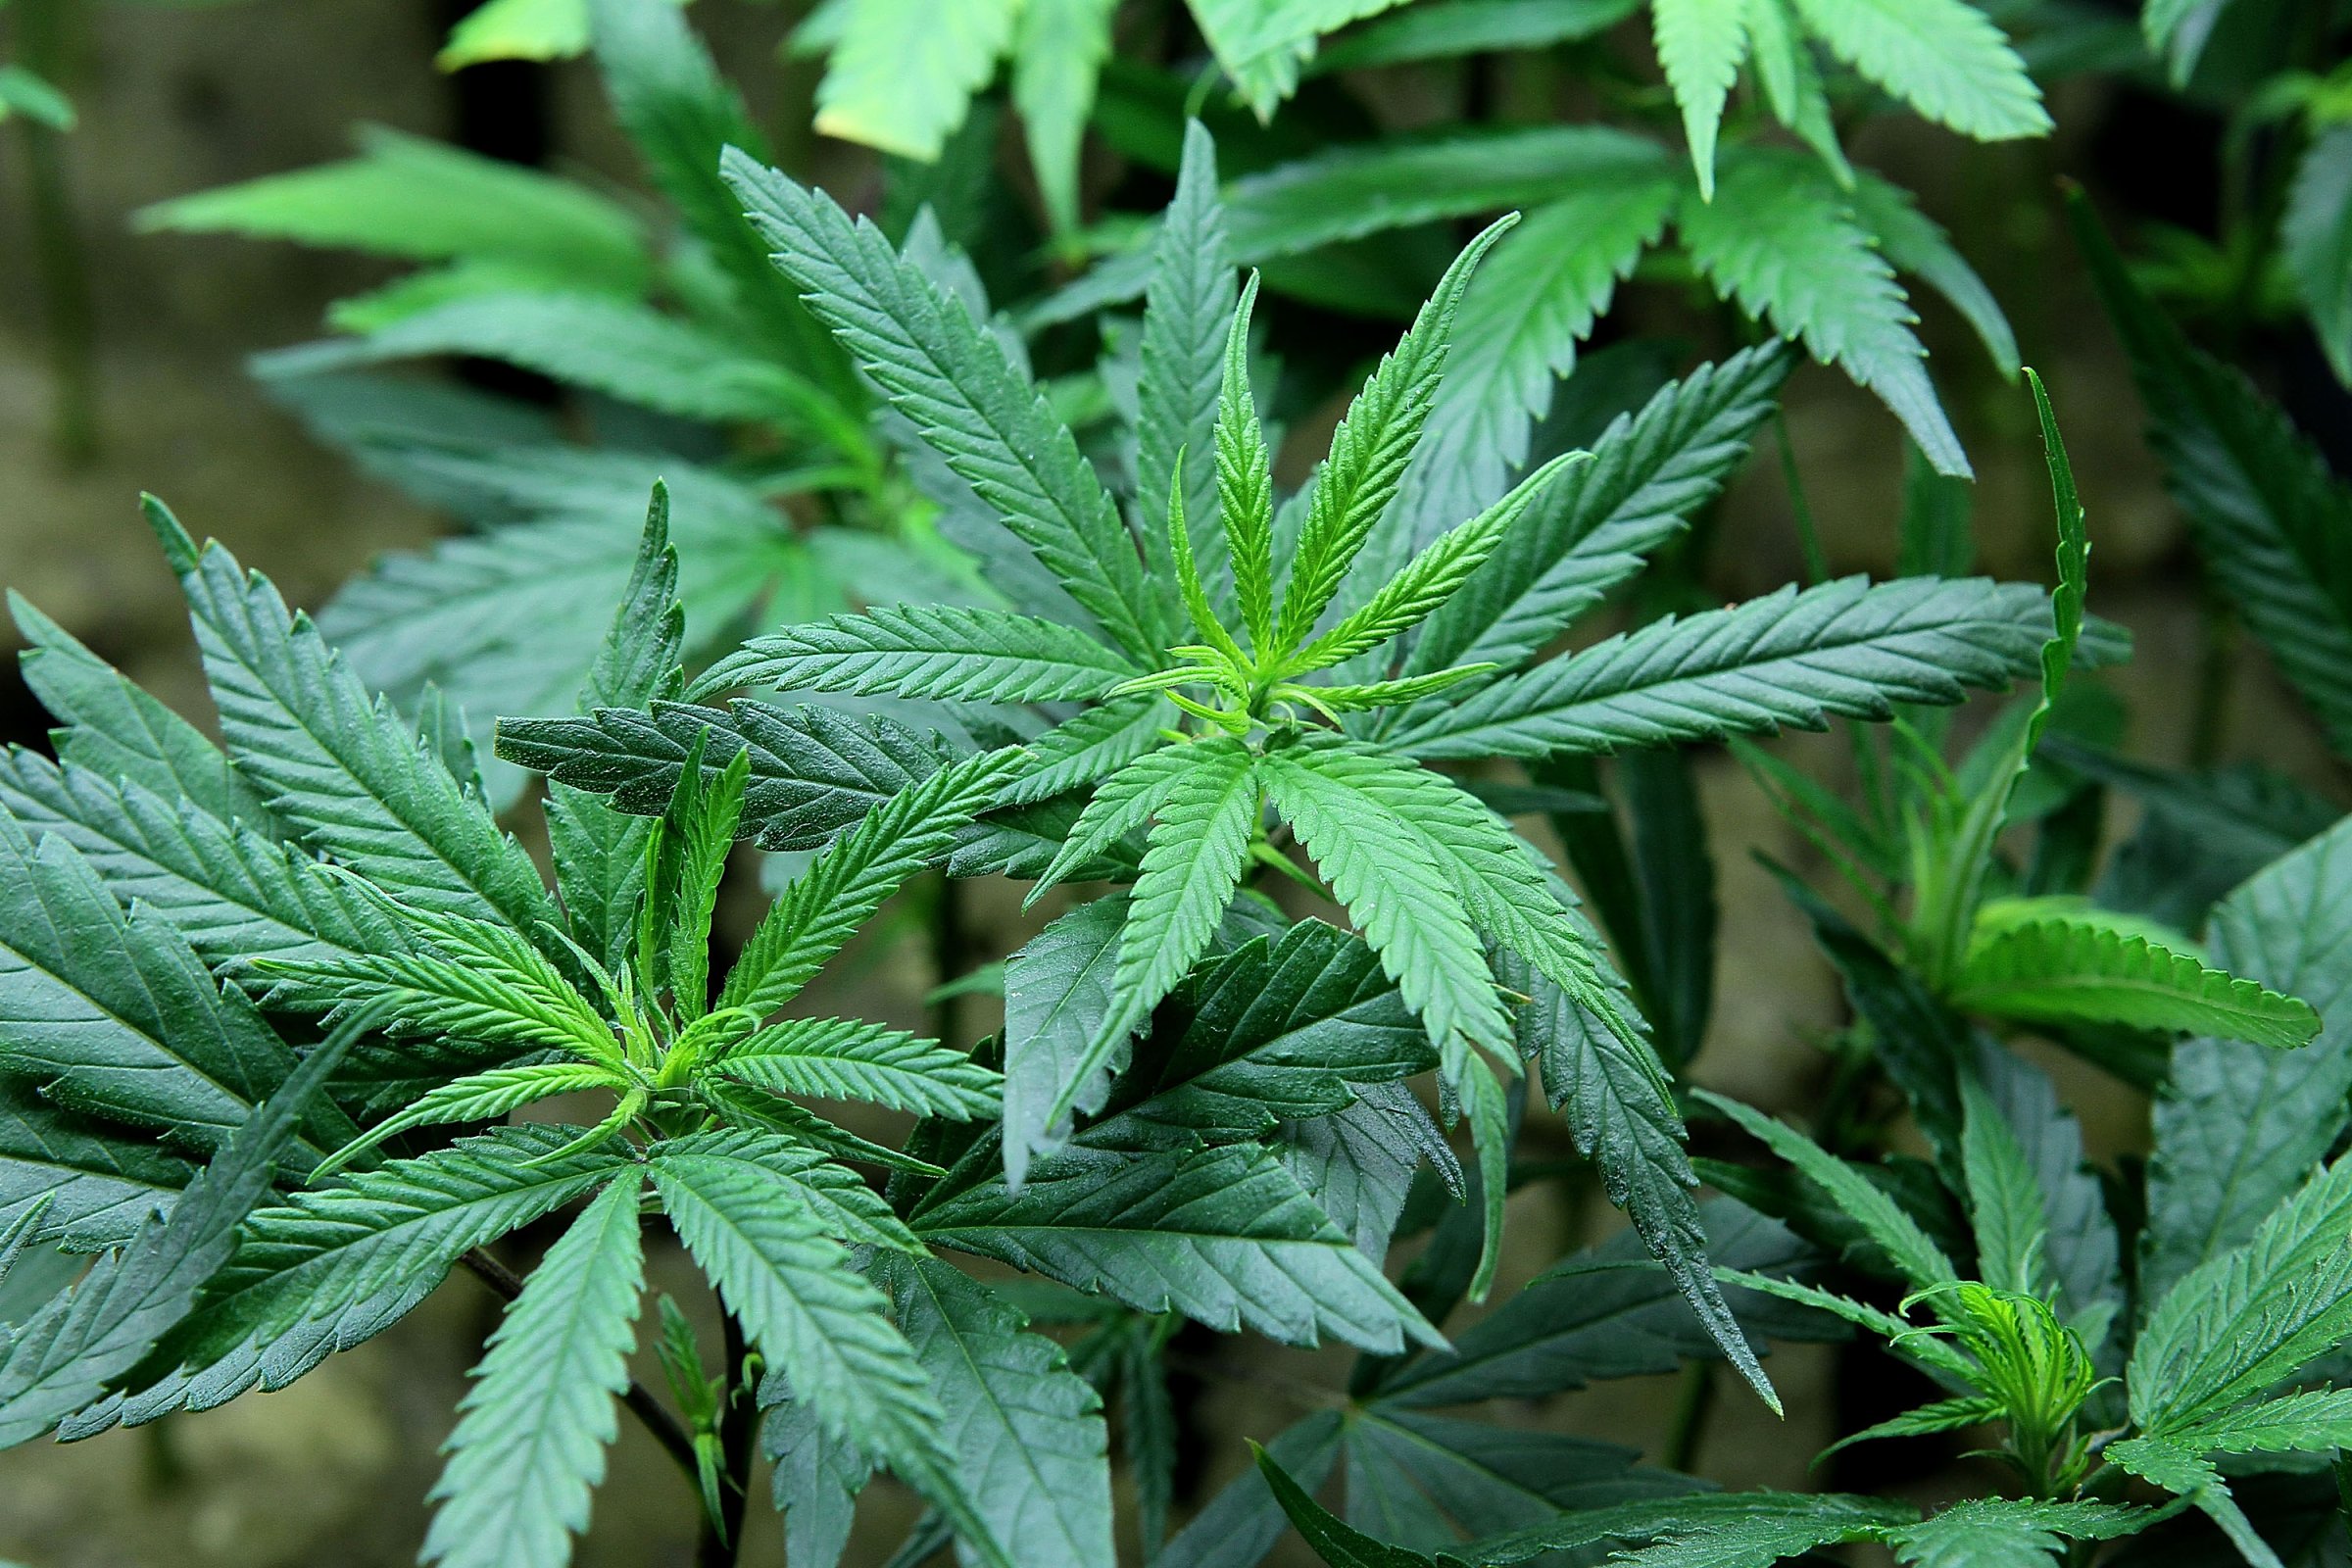 Marijuana plants are displayed at the Berkeley Patients Group March 25, 2010 in Berkeley, California.